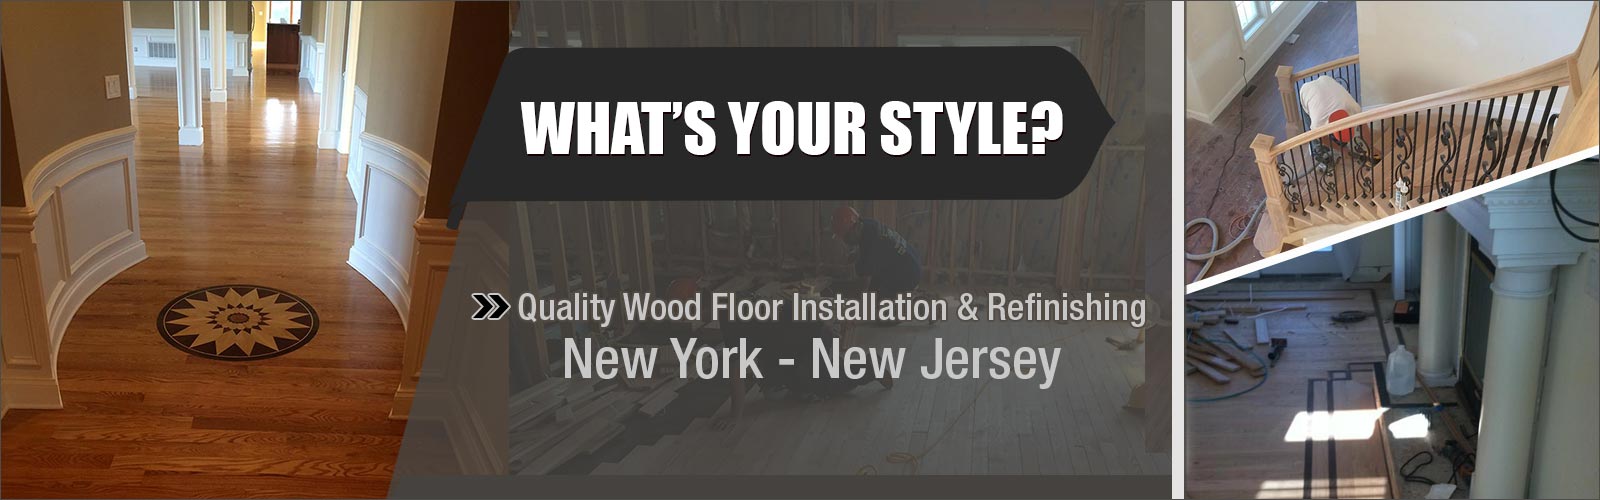 Custom Wood Floors New York And New Jersey Flooring Store